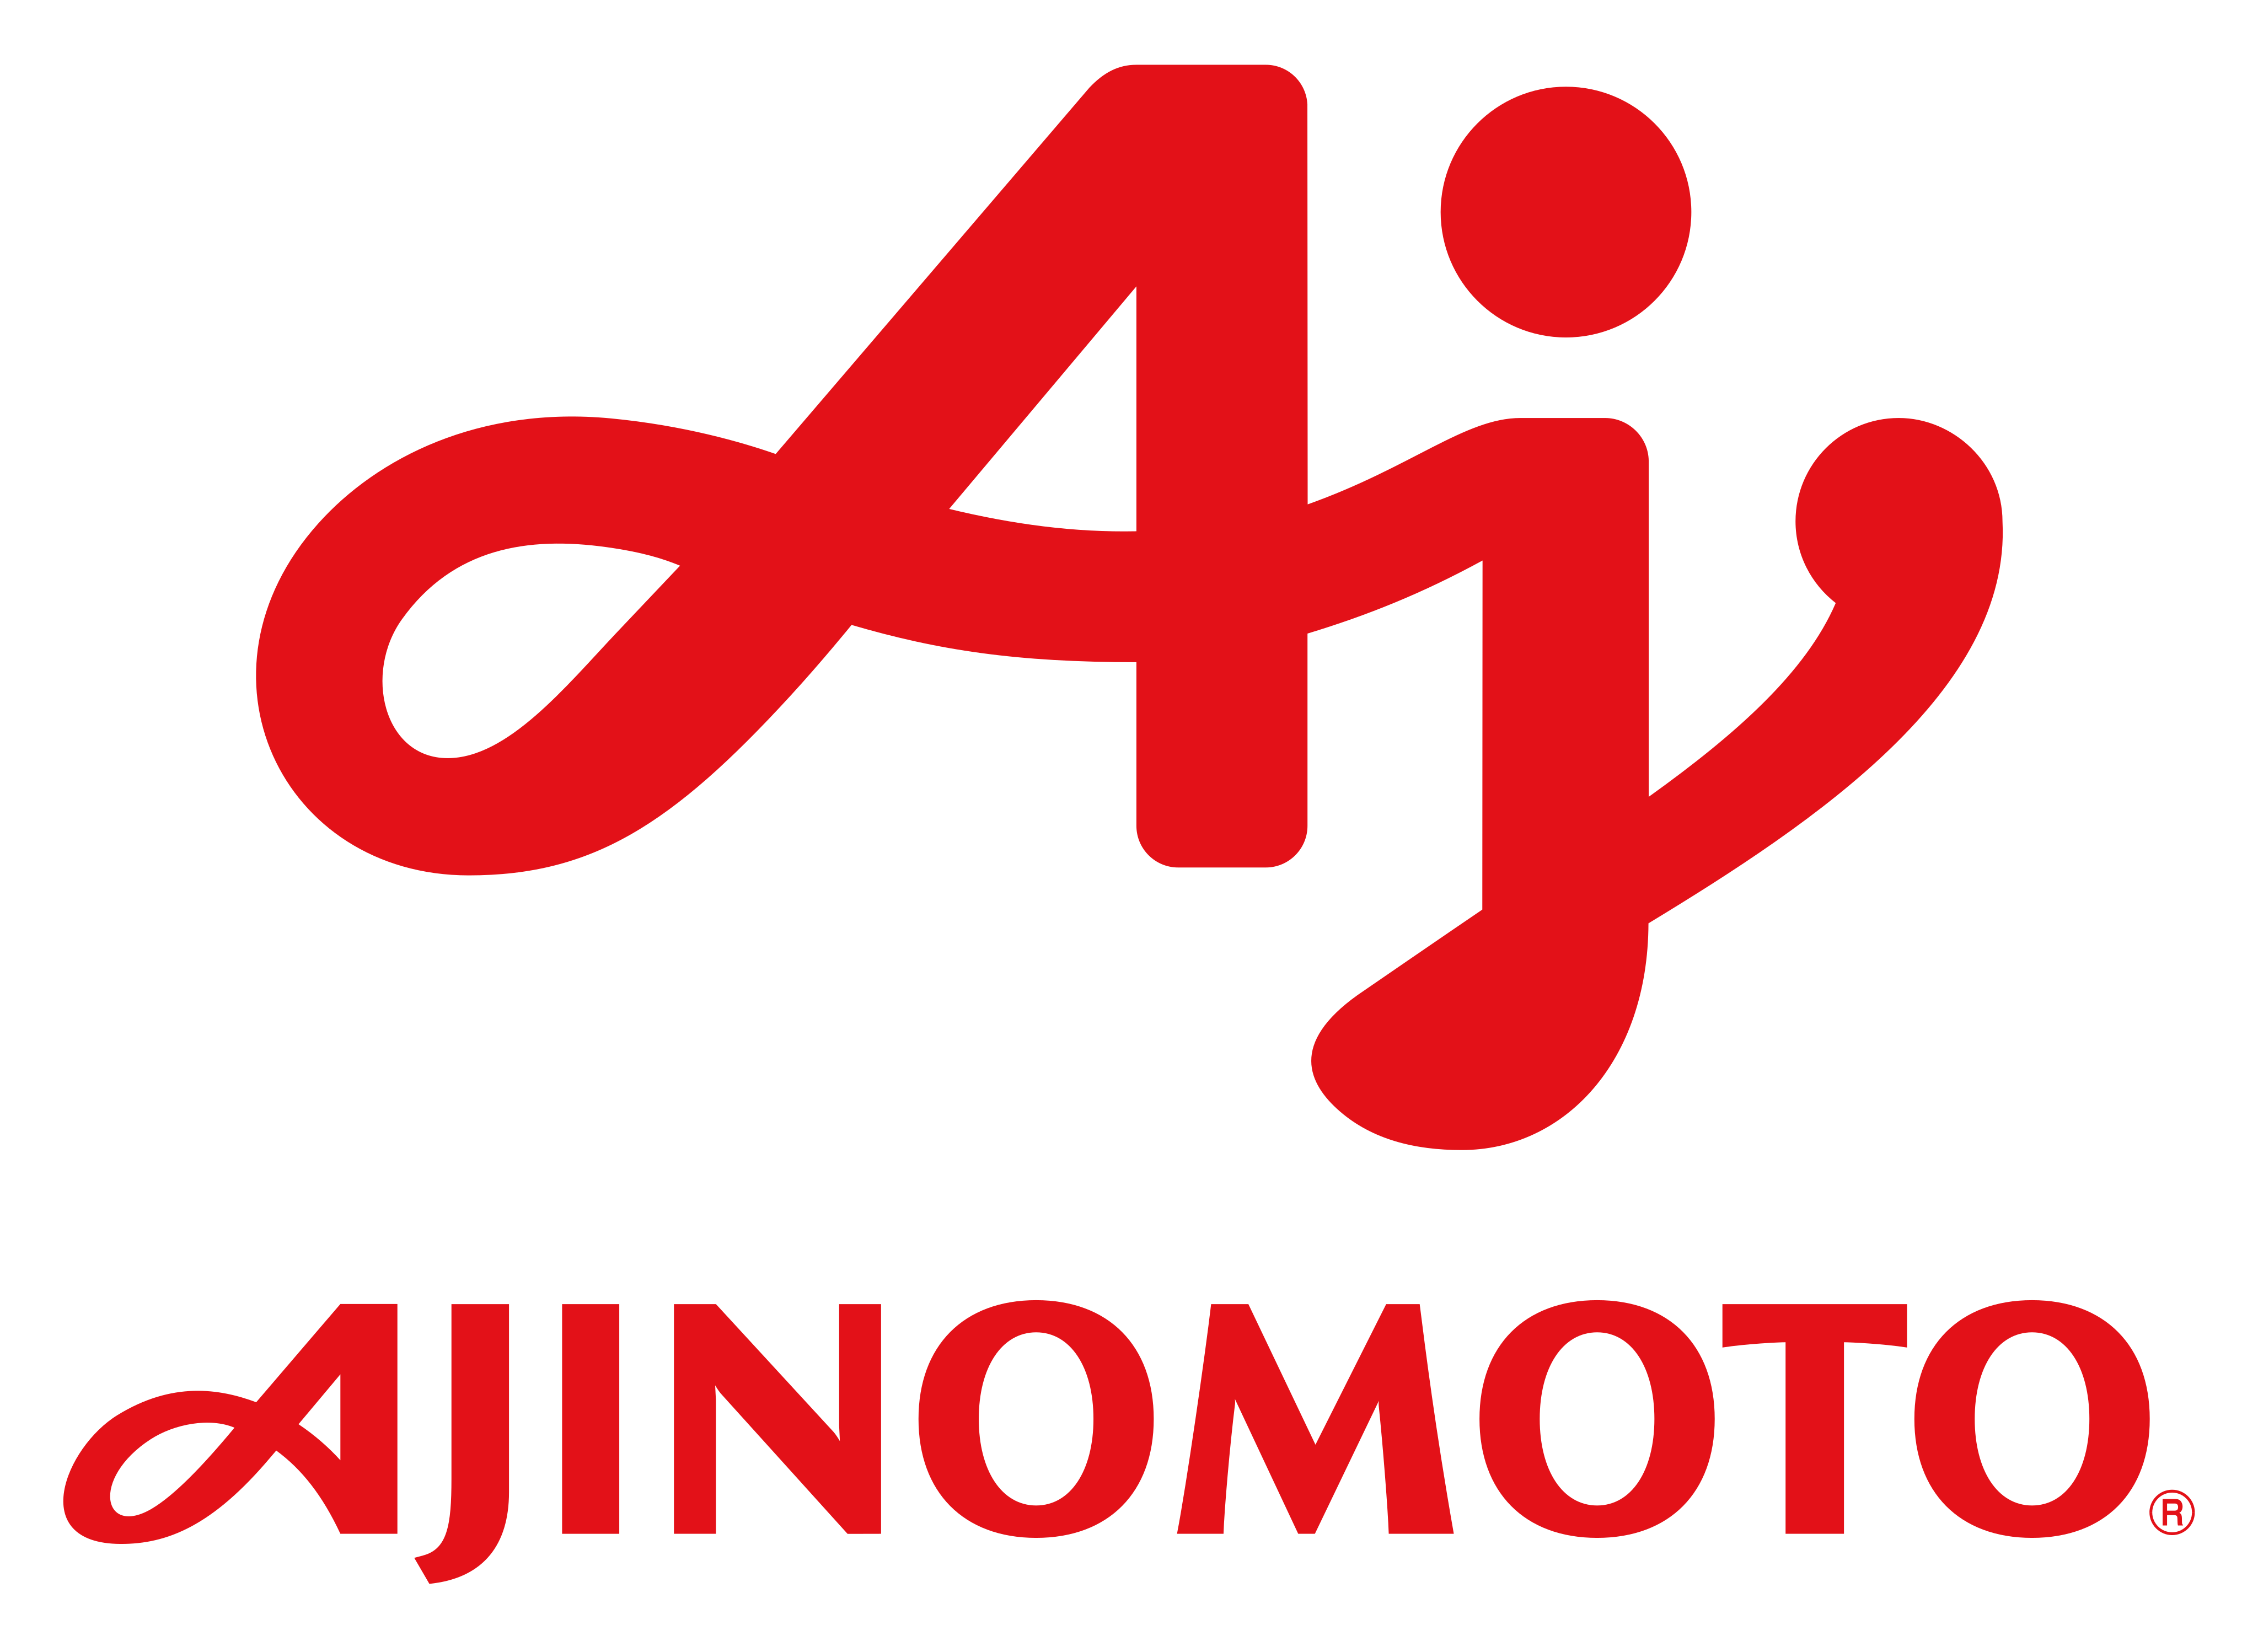 ajinomoto logo 1 - Ajinomoto Logo